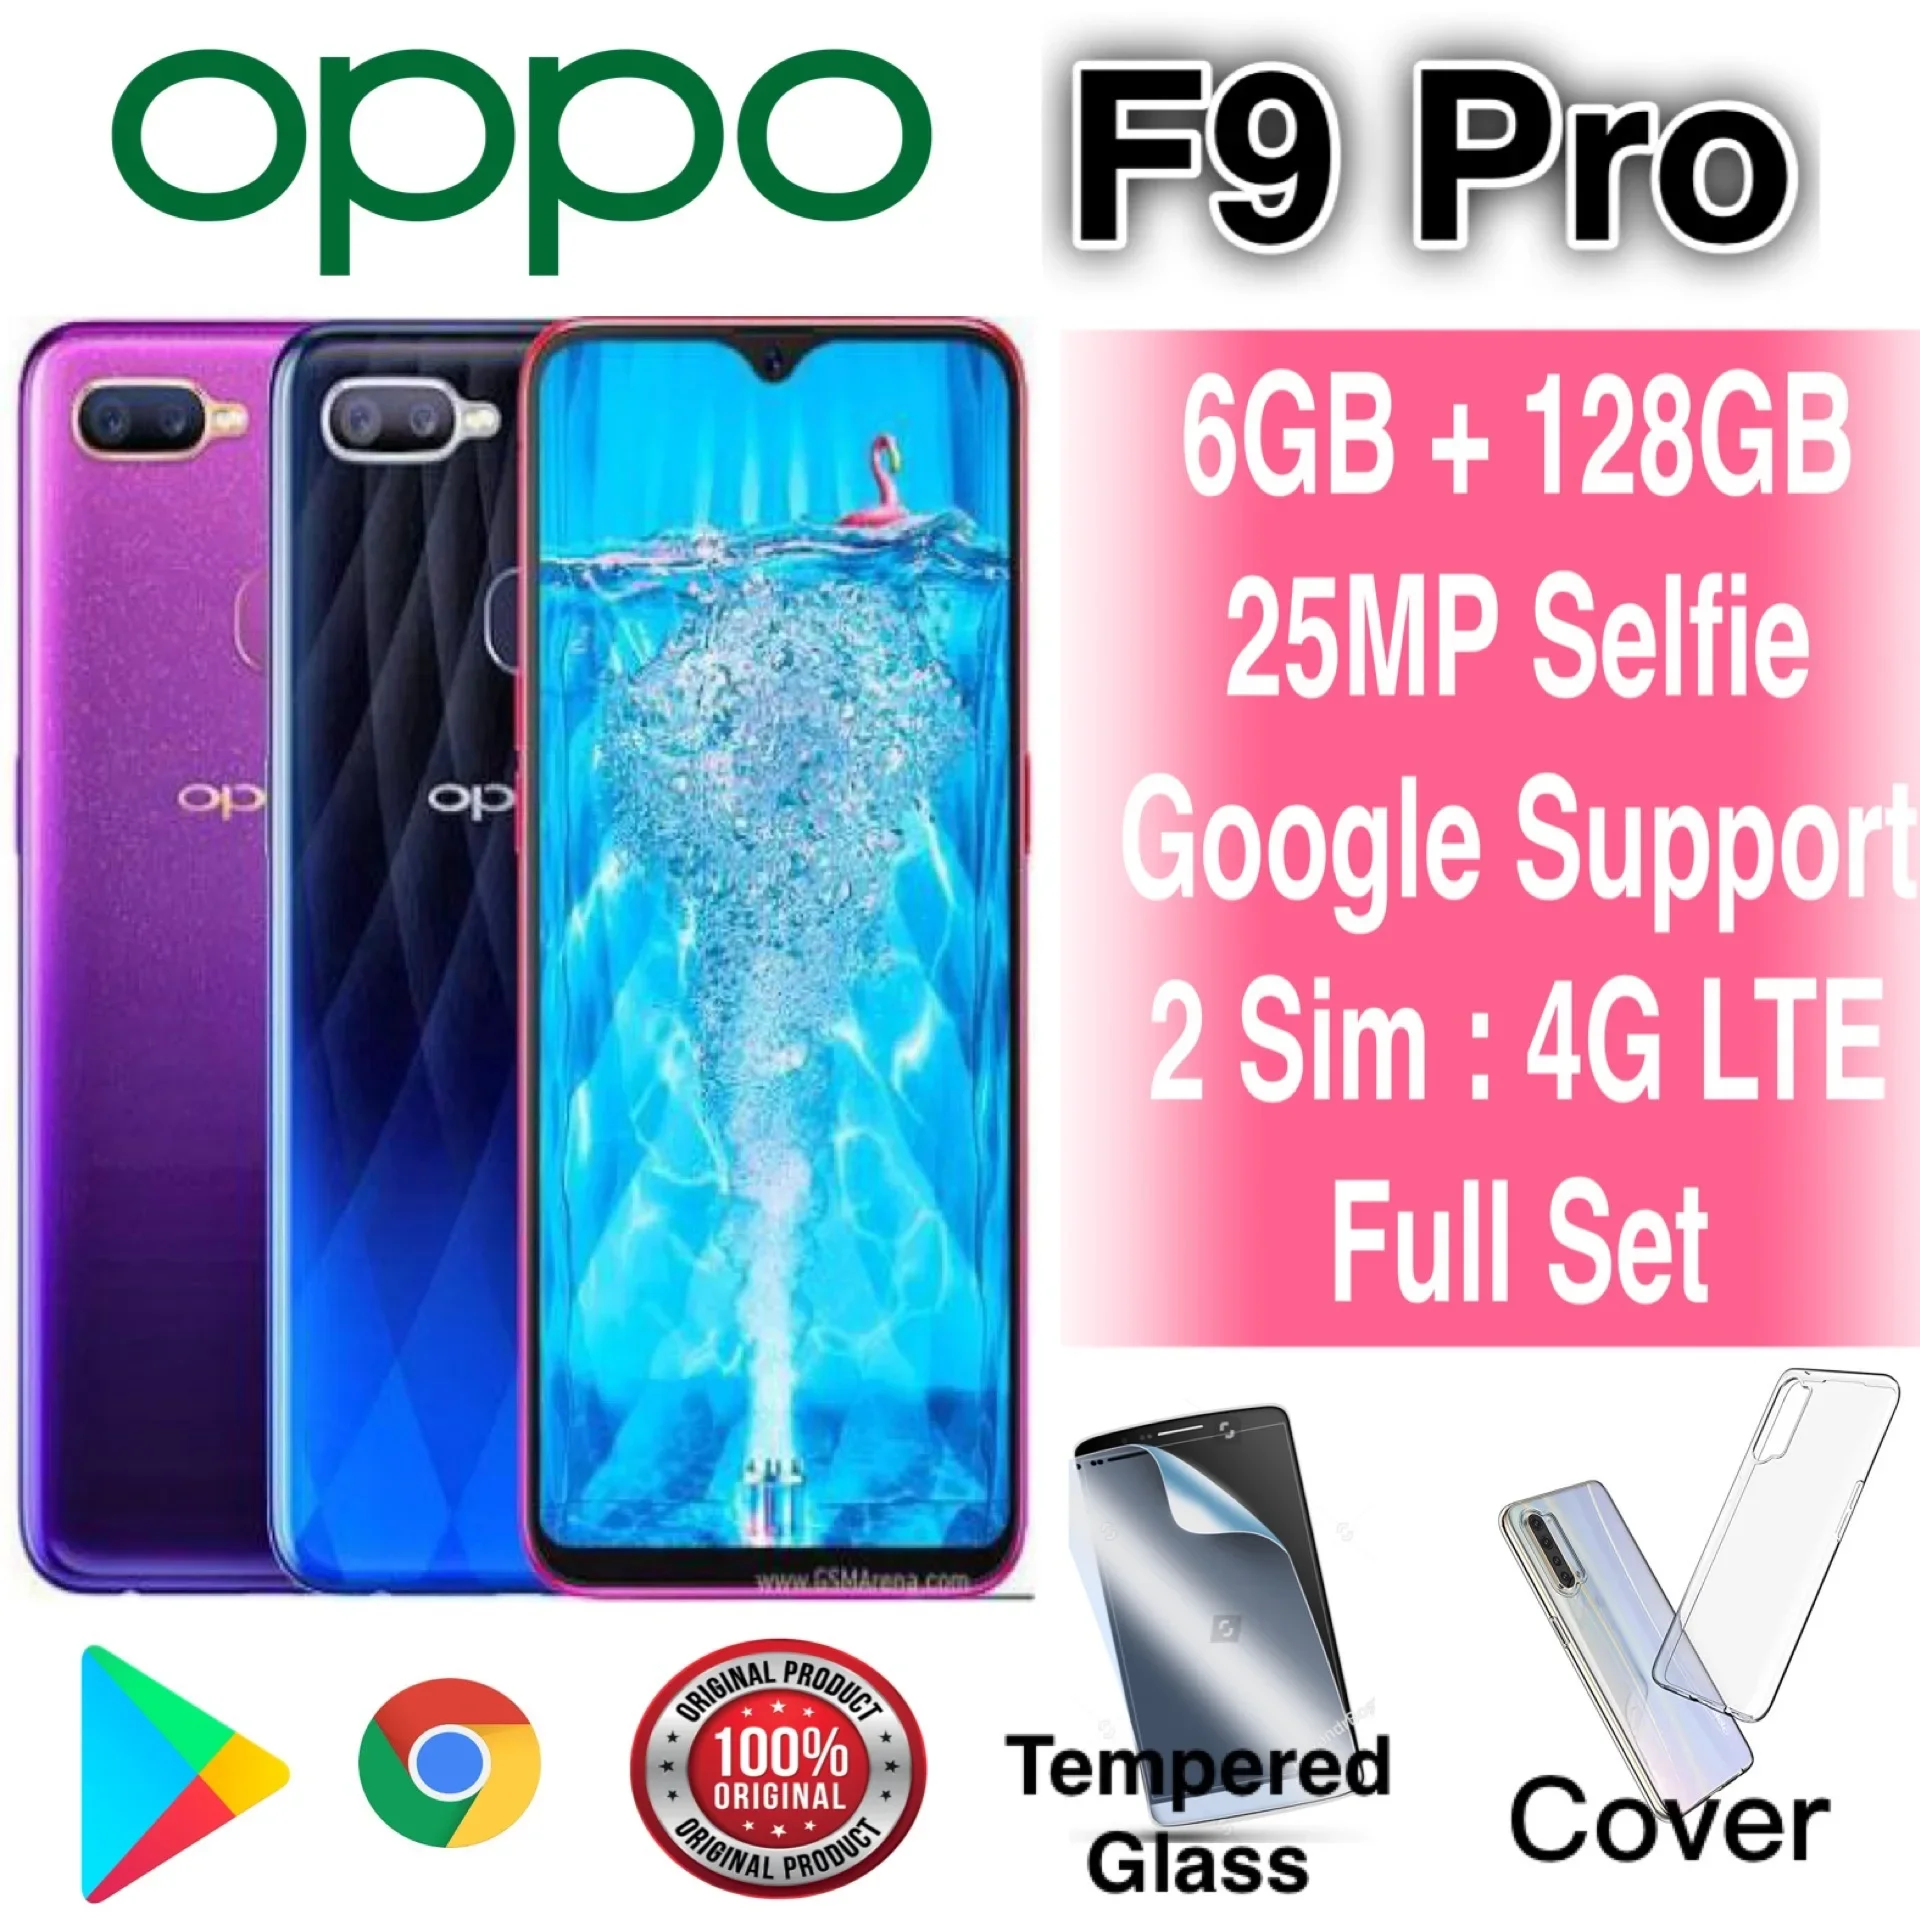 100% Original - OPPO F9 Pro (128GB + 6GB Ram) Full Set with box